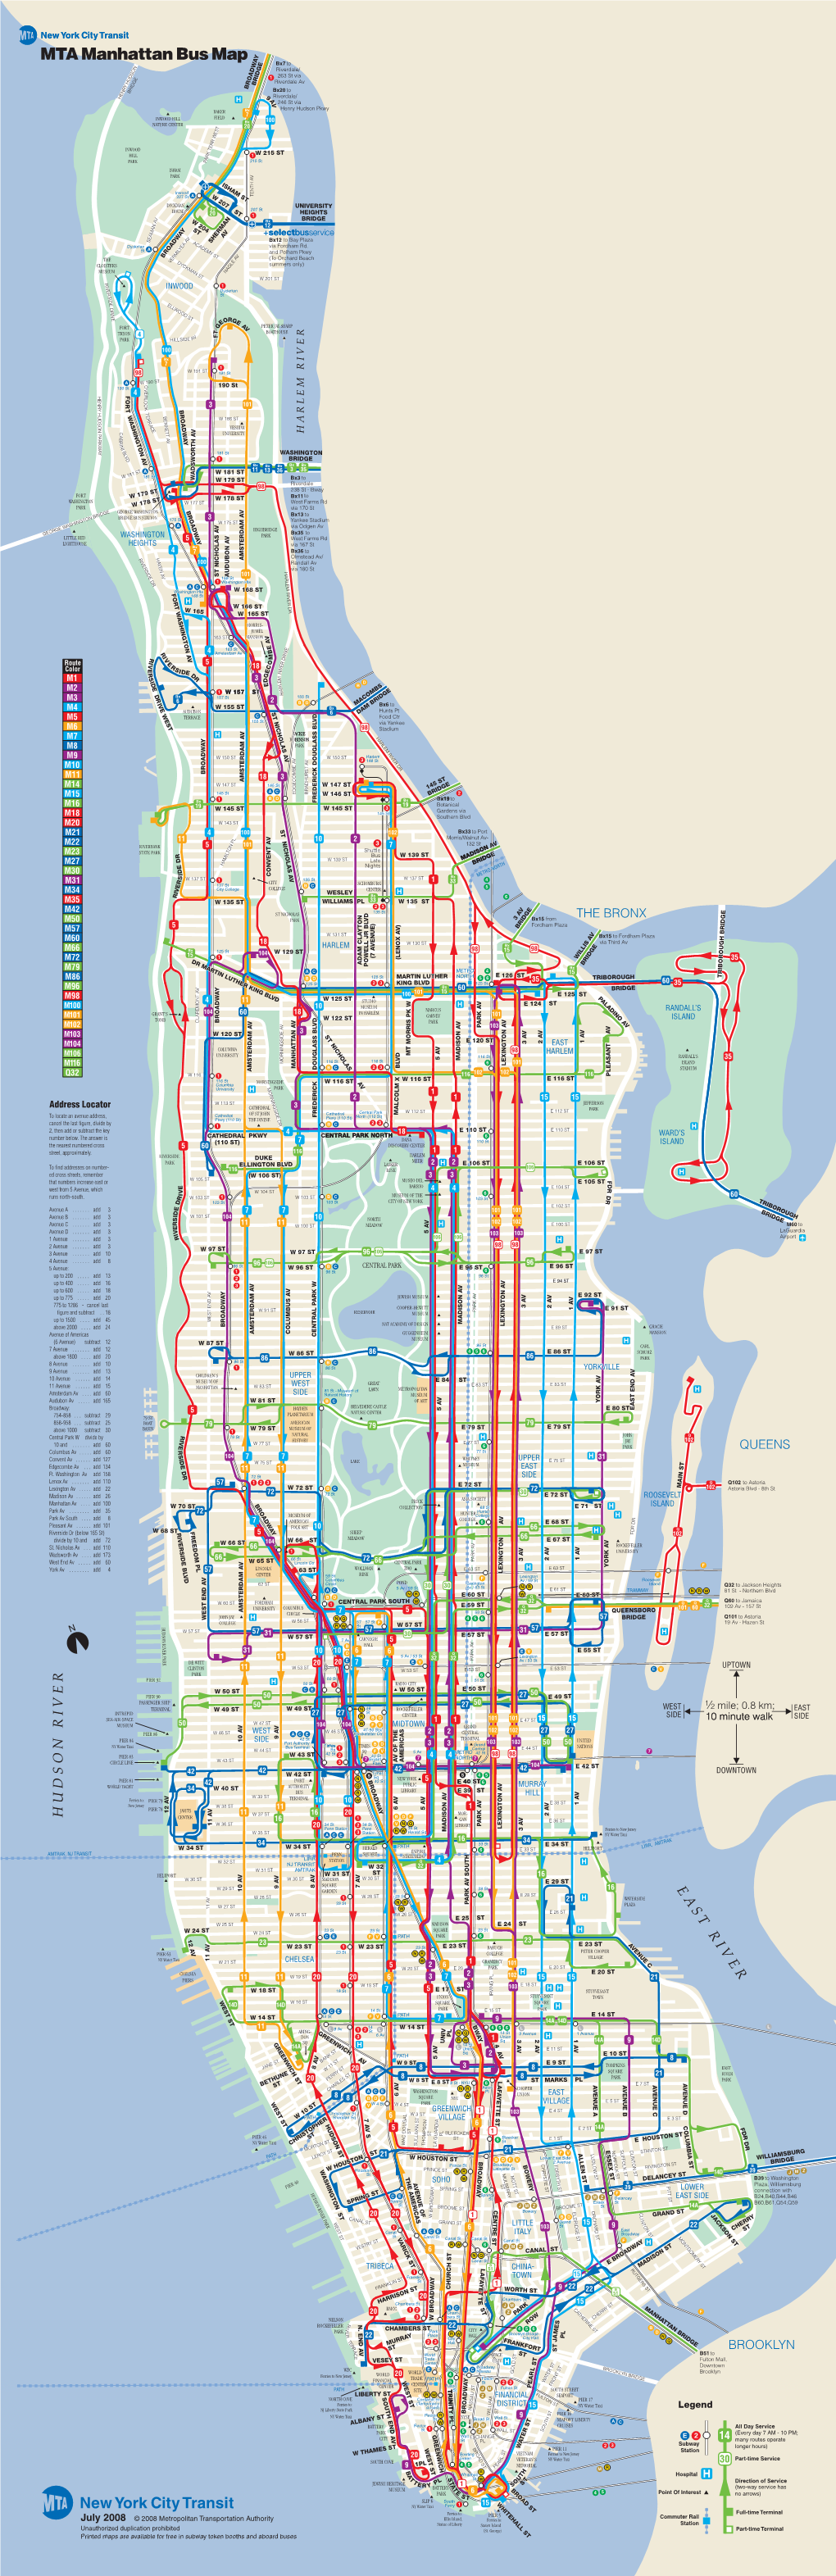 MTA Manhattan Bus Map Y Bx7 to Riverdale/ 1 263 St Via Riverdale Av BRIDGE BROADWA Bx20 to BRIDGE 9 Riverdale/ HENRY HUDSON A